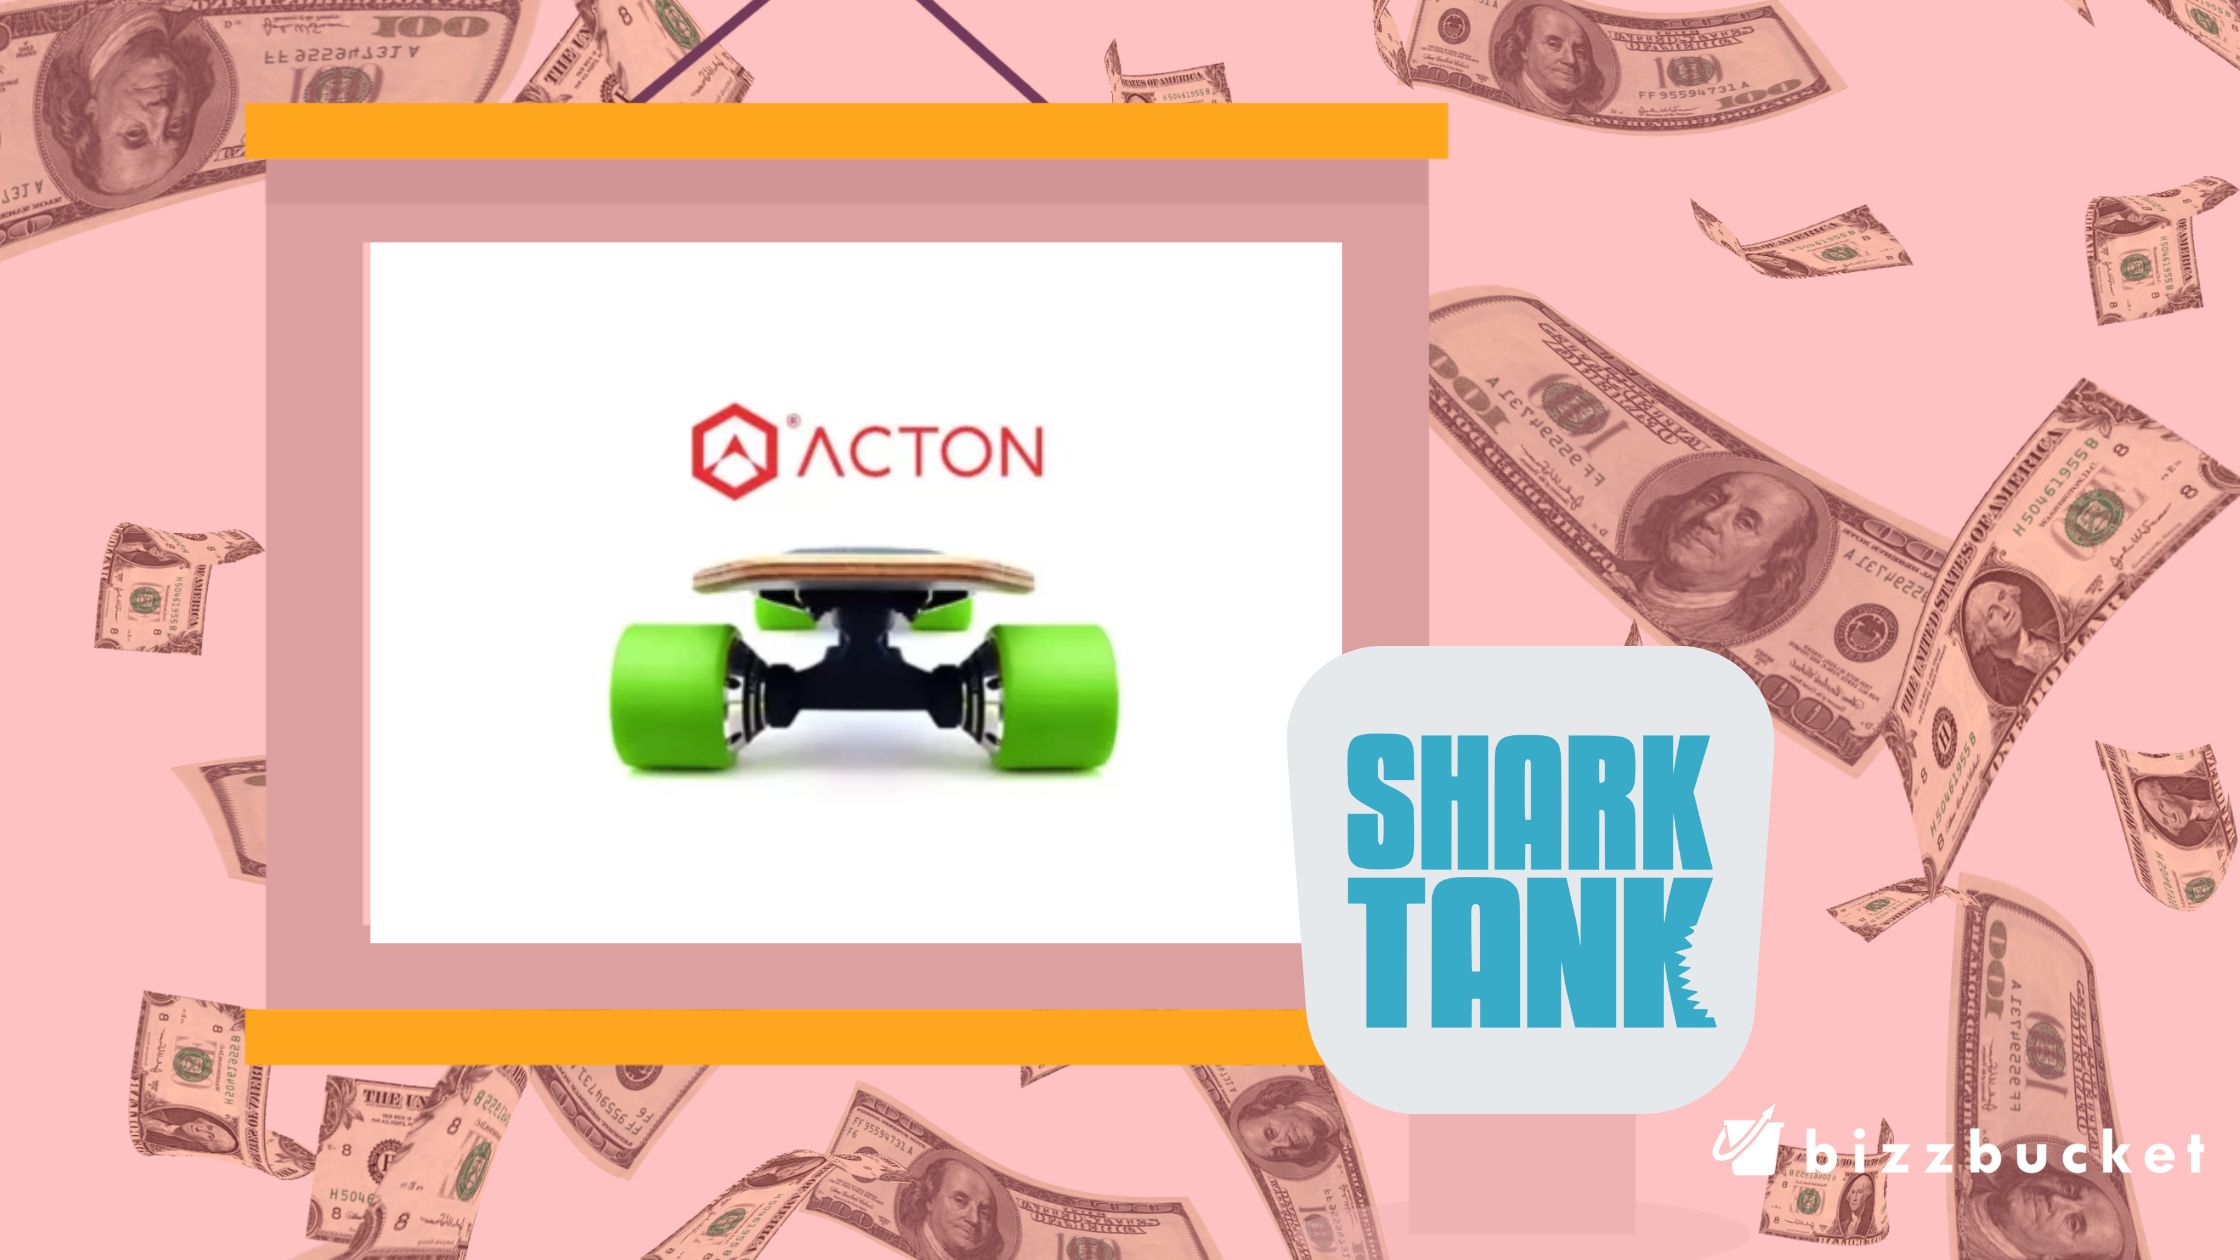 acton skates shark tank update